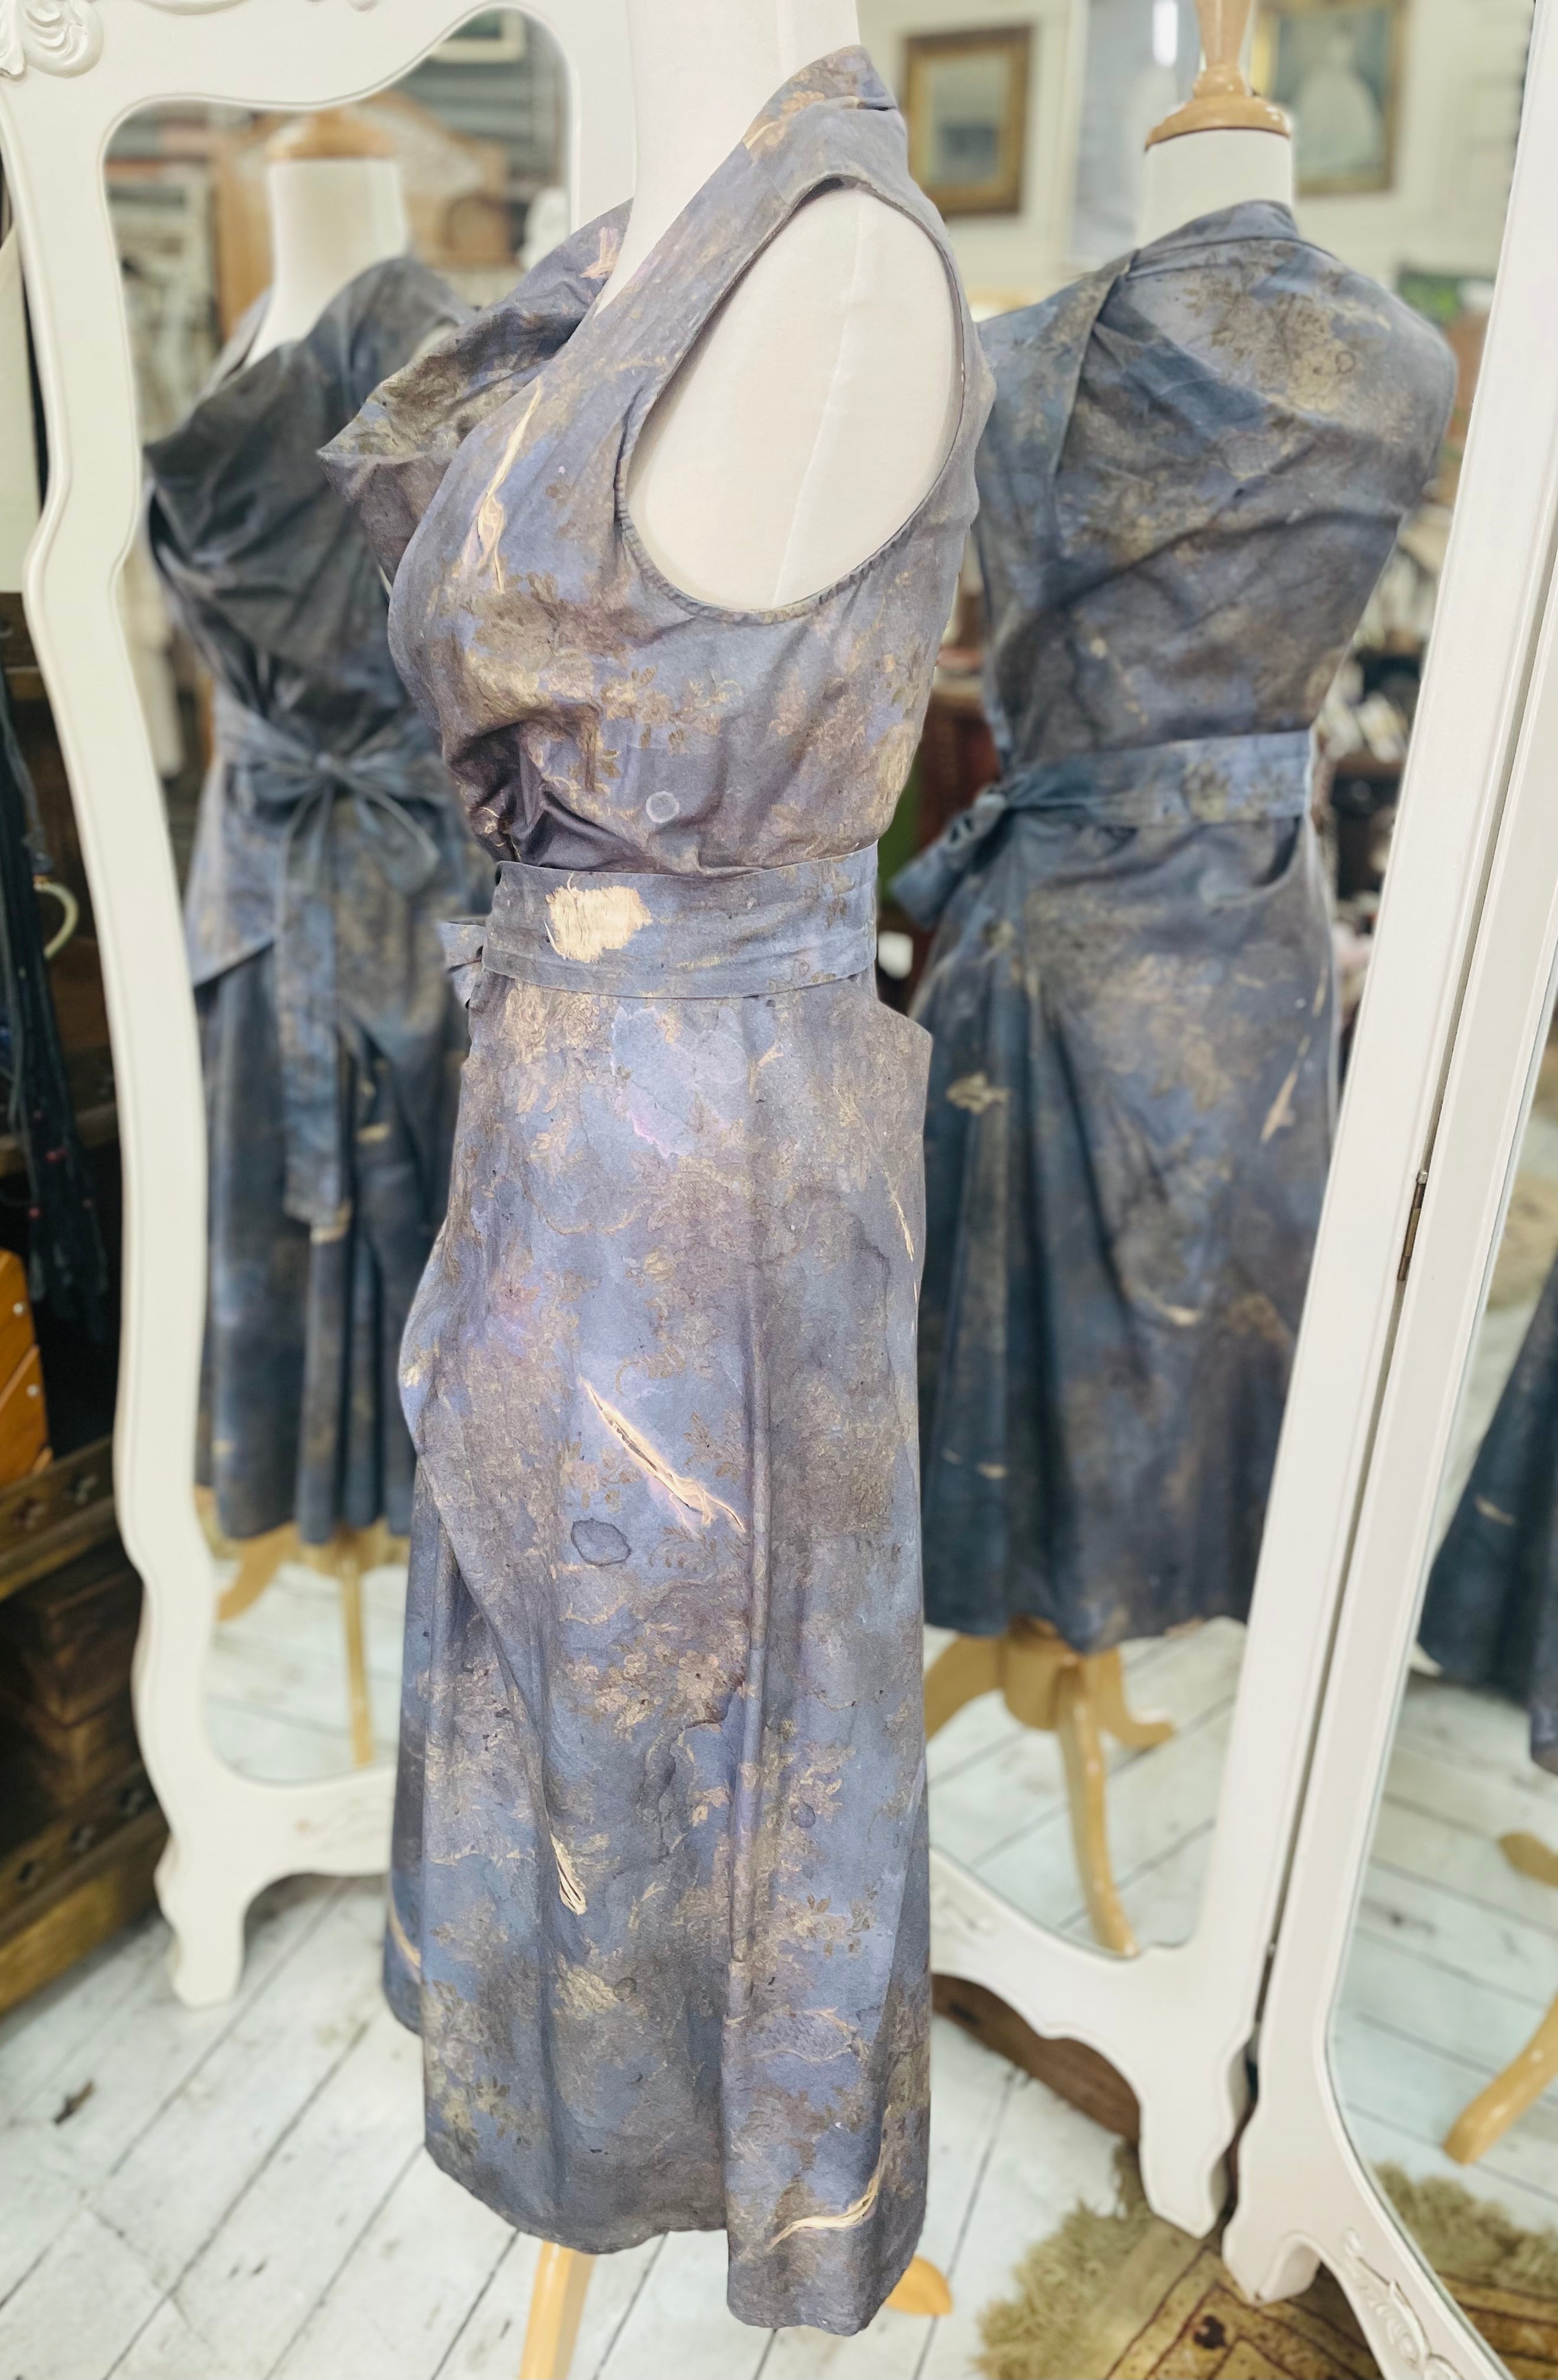 Vivienne Westwood Anglomania “Fish Apron” Dress